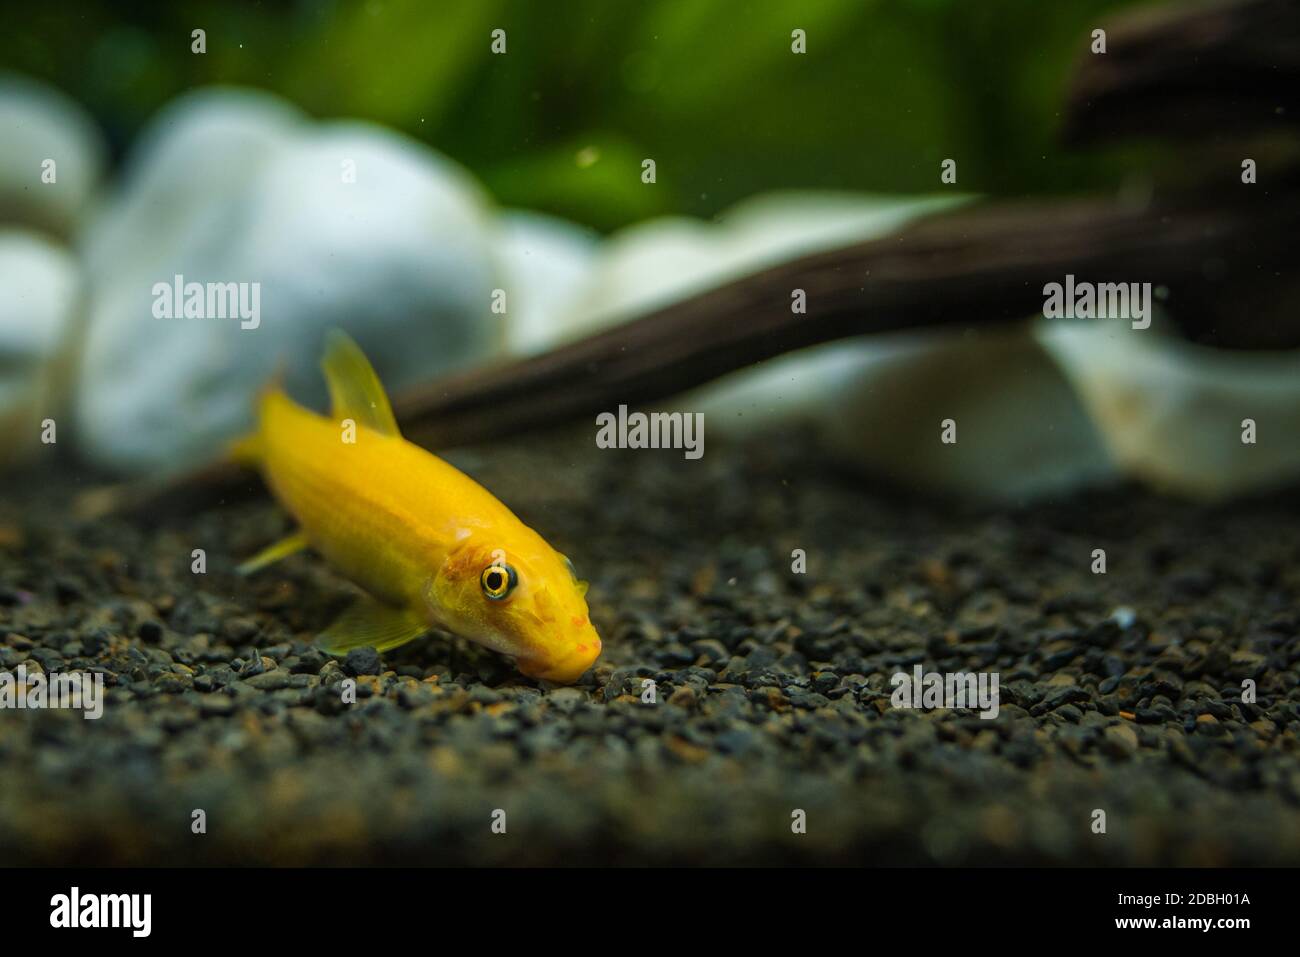 Yellow chinese algaey eater - Gyrinocheilus in fishtank cleaning gravel. Stock Photo